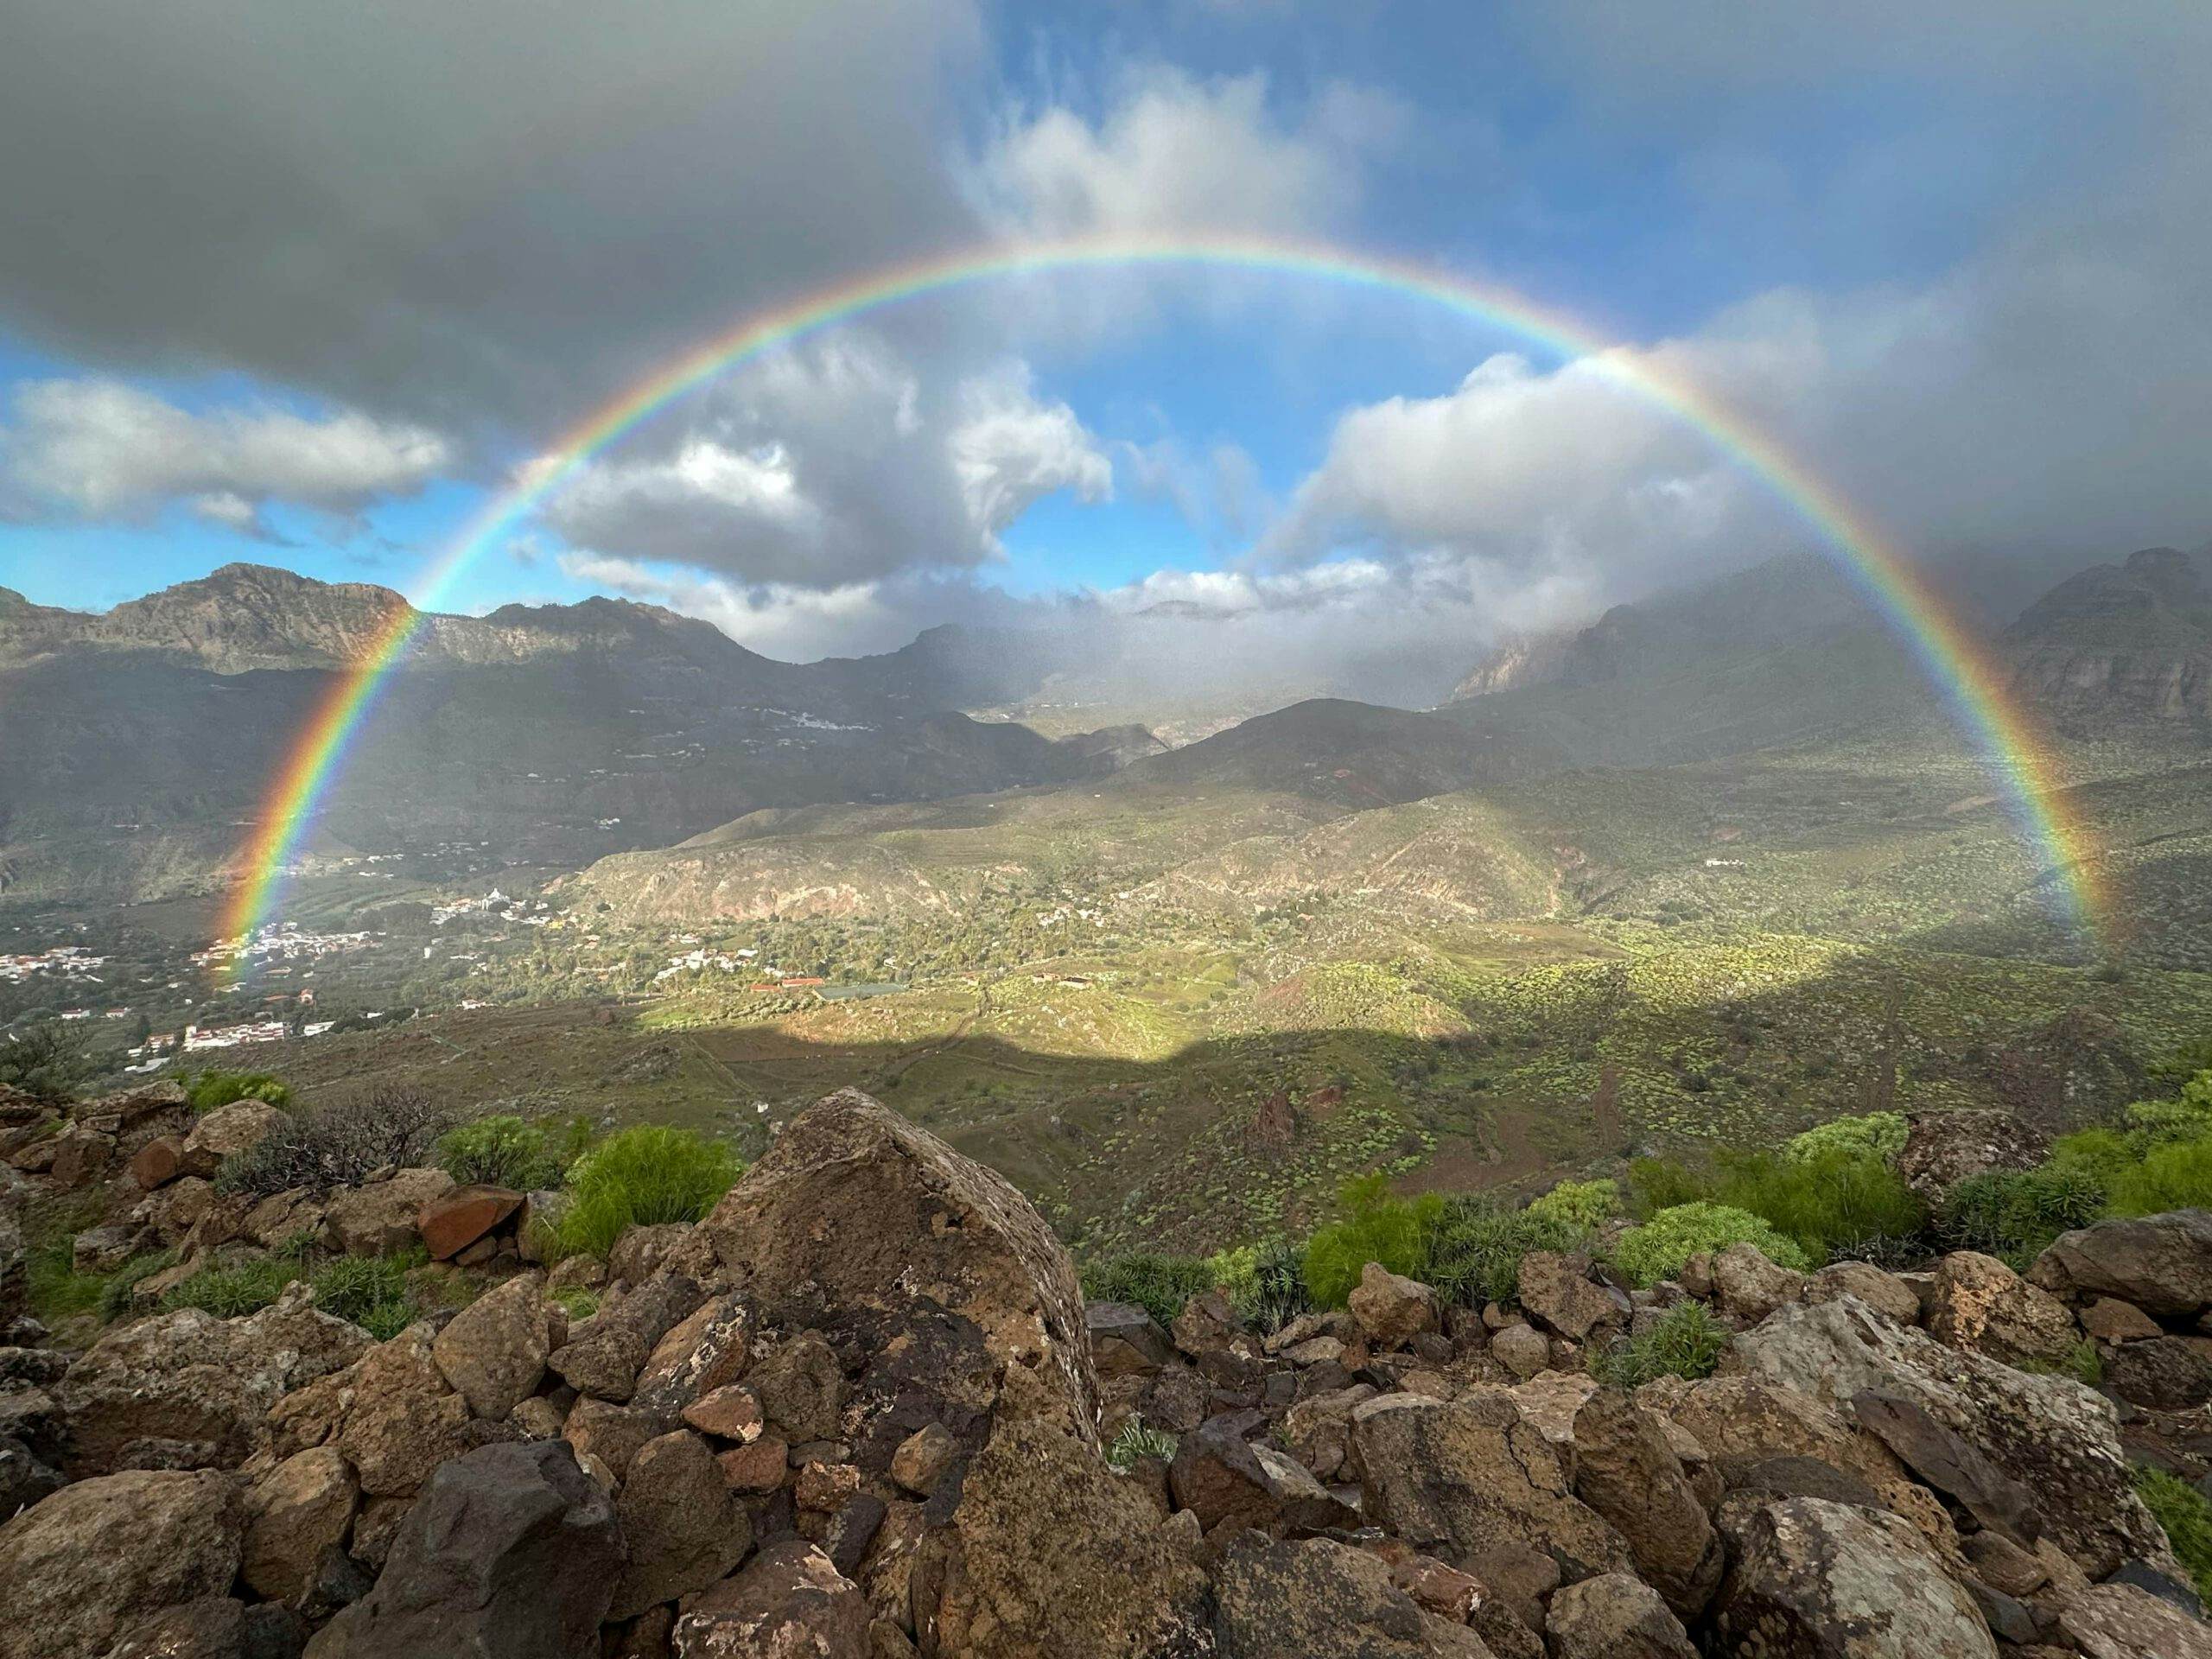 Rainbow over Santa Lucia de Tirajana